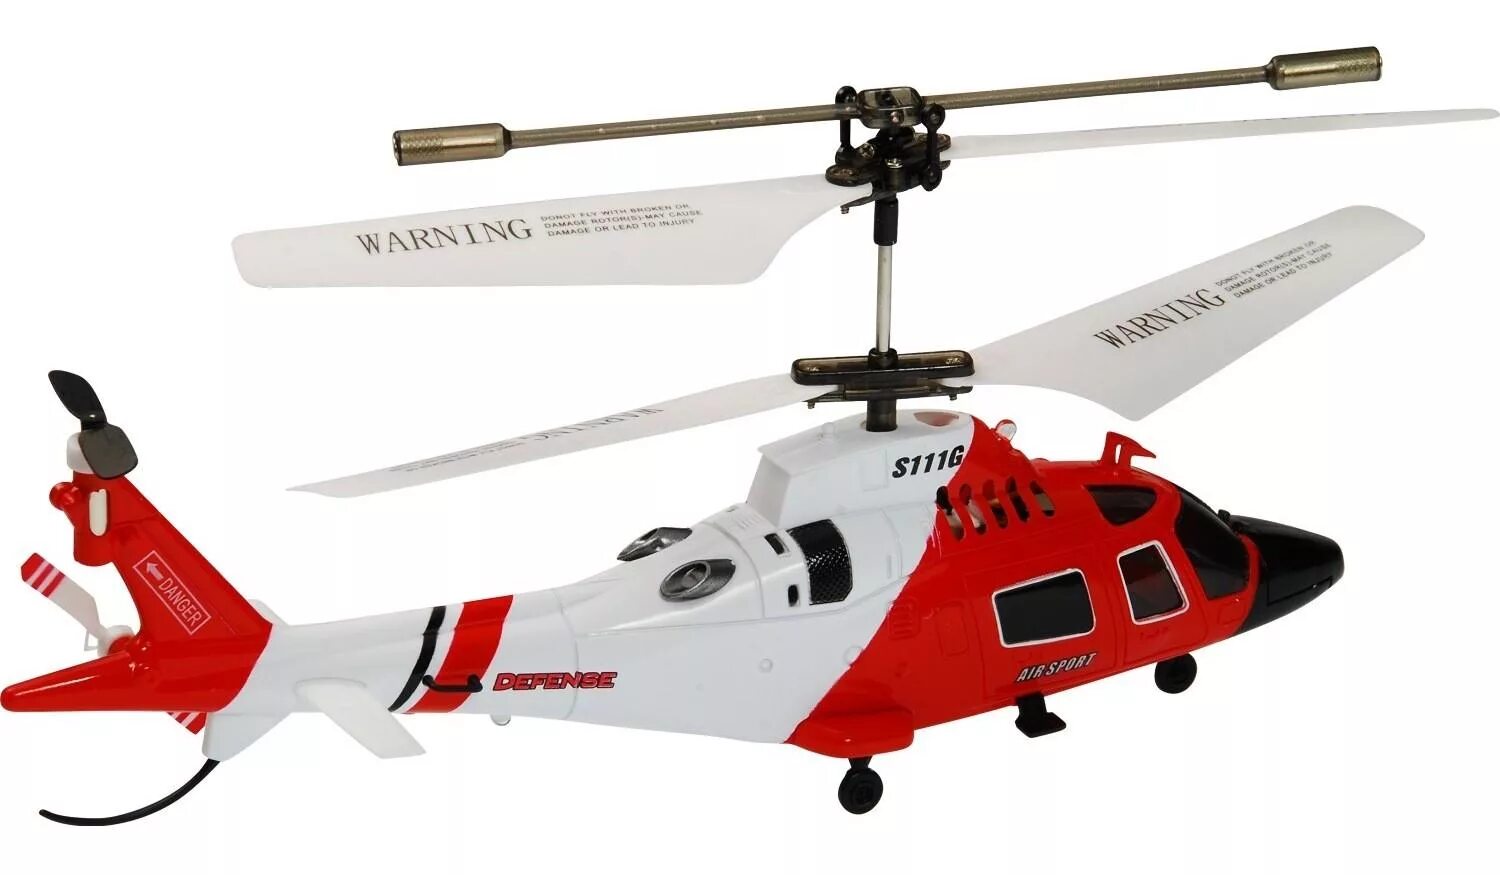 Вертолет Syma s111g. Вертолет Syma Marines (s111g). Вертолет на радиоуправлении Syma s111g. Радиоуправляемый вертолет Syma s111g с гироскопом.